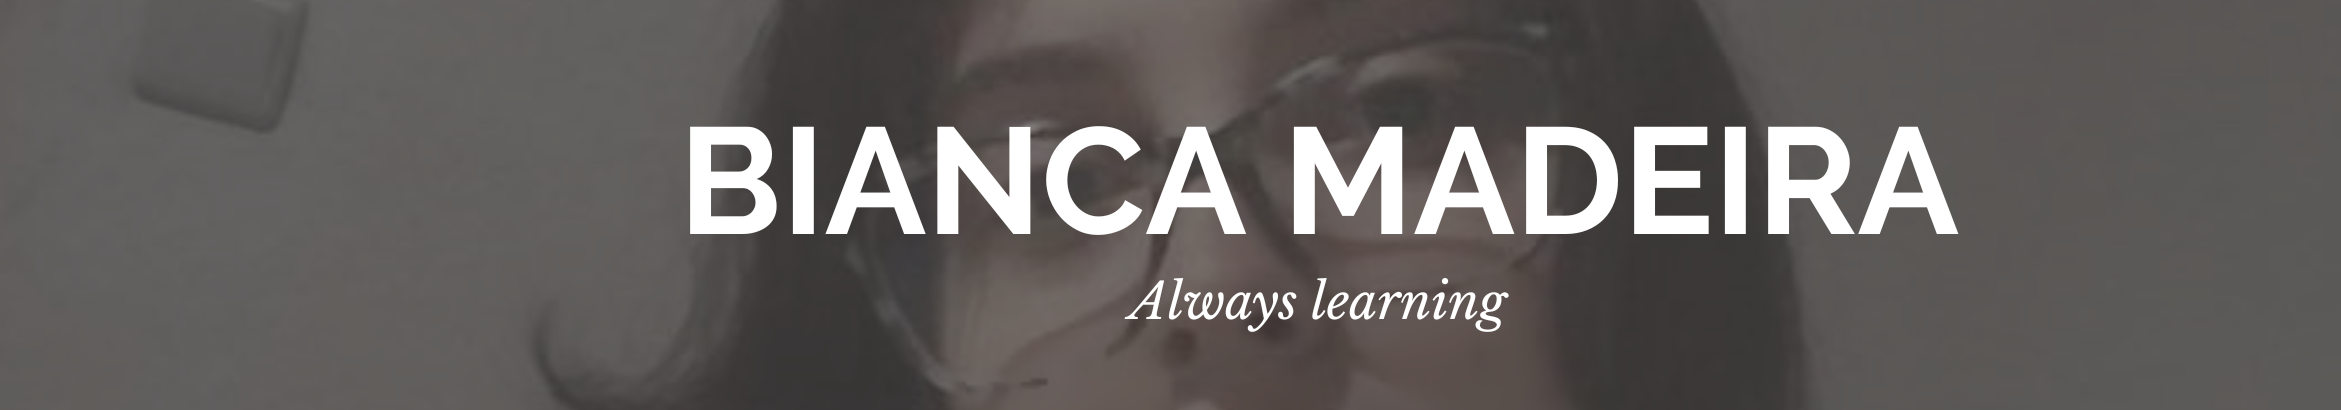 Bianca Madeira Designer's profile banner